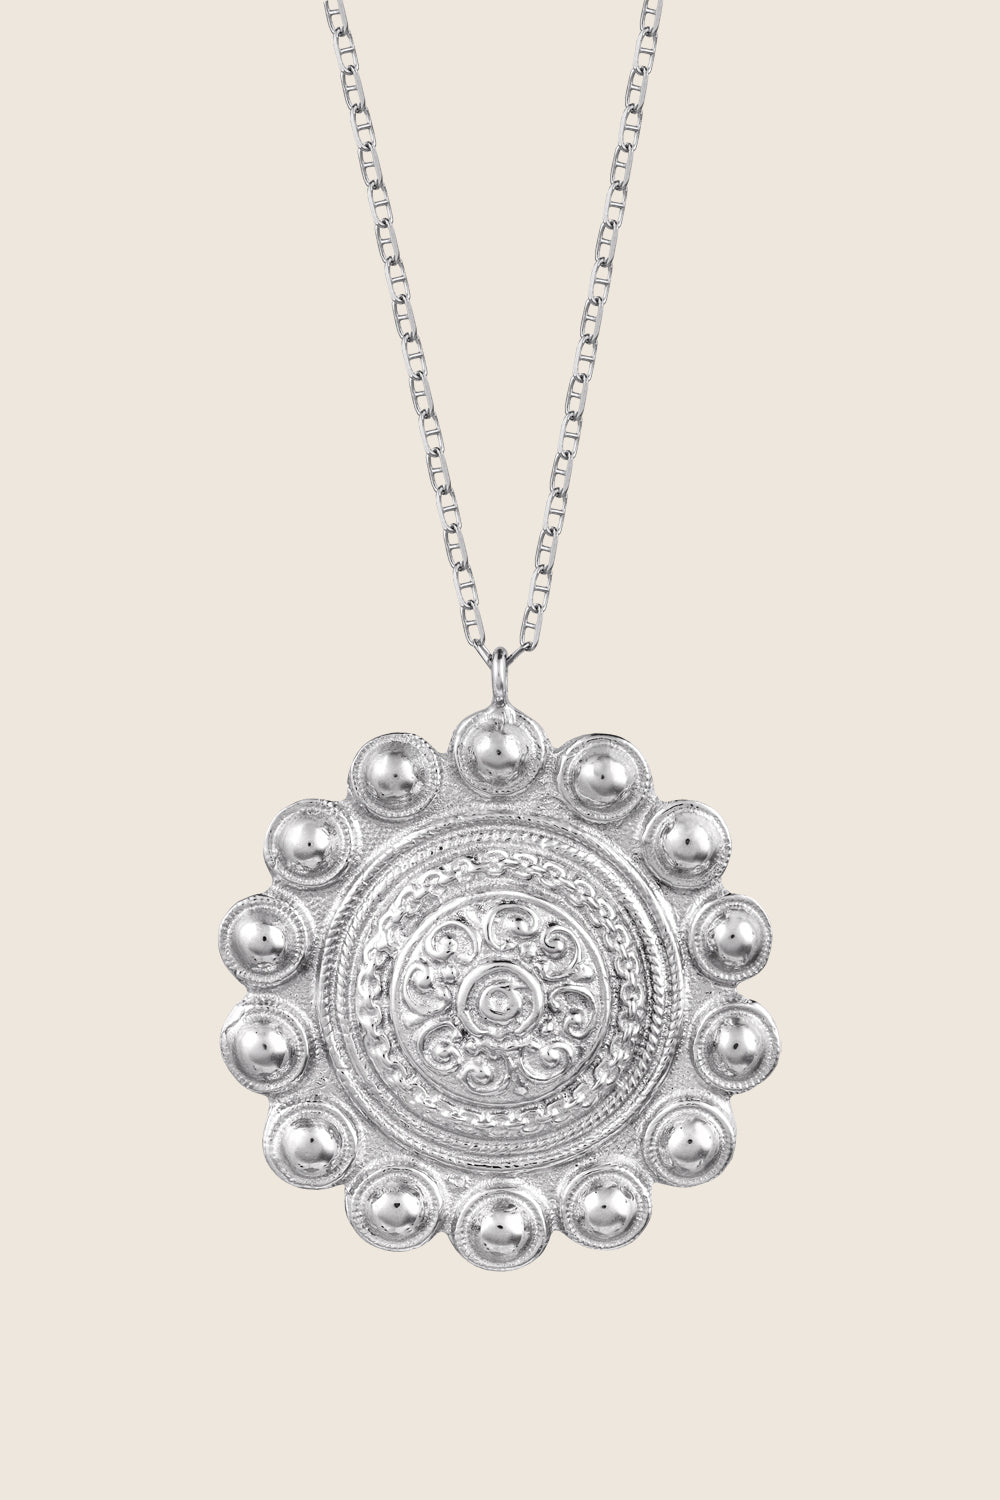 orientalny naszyjnik srebro 925 VALA biżuteria UMIAR vintage